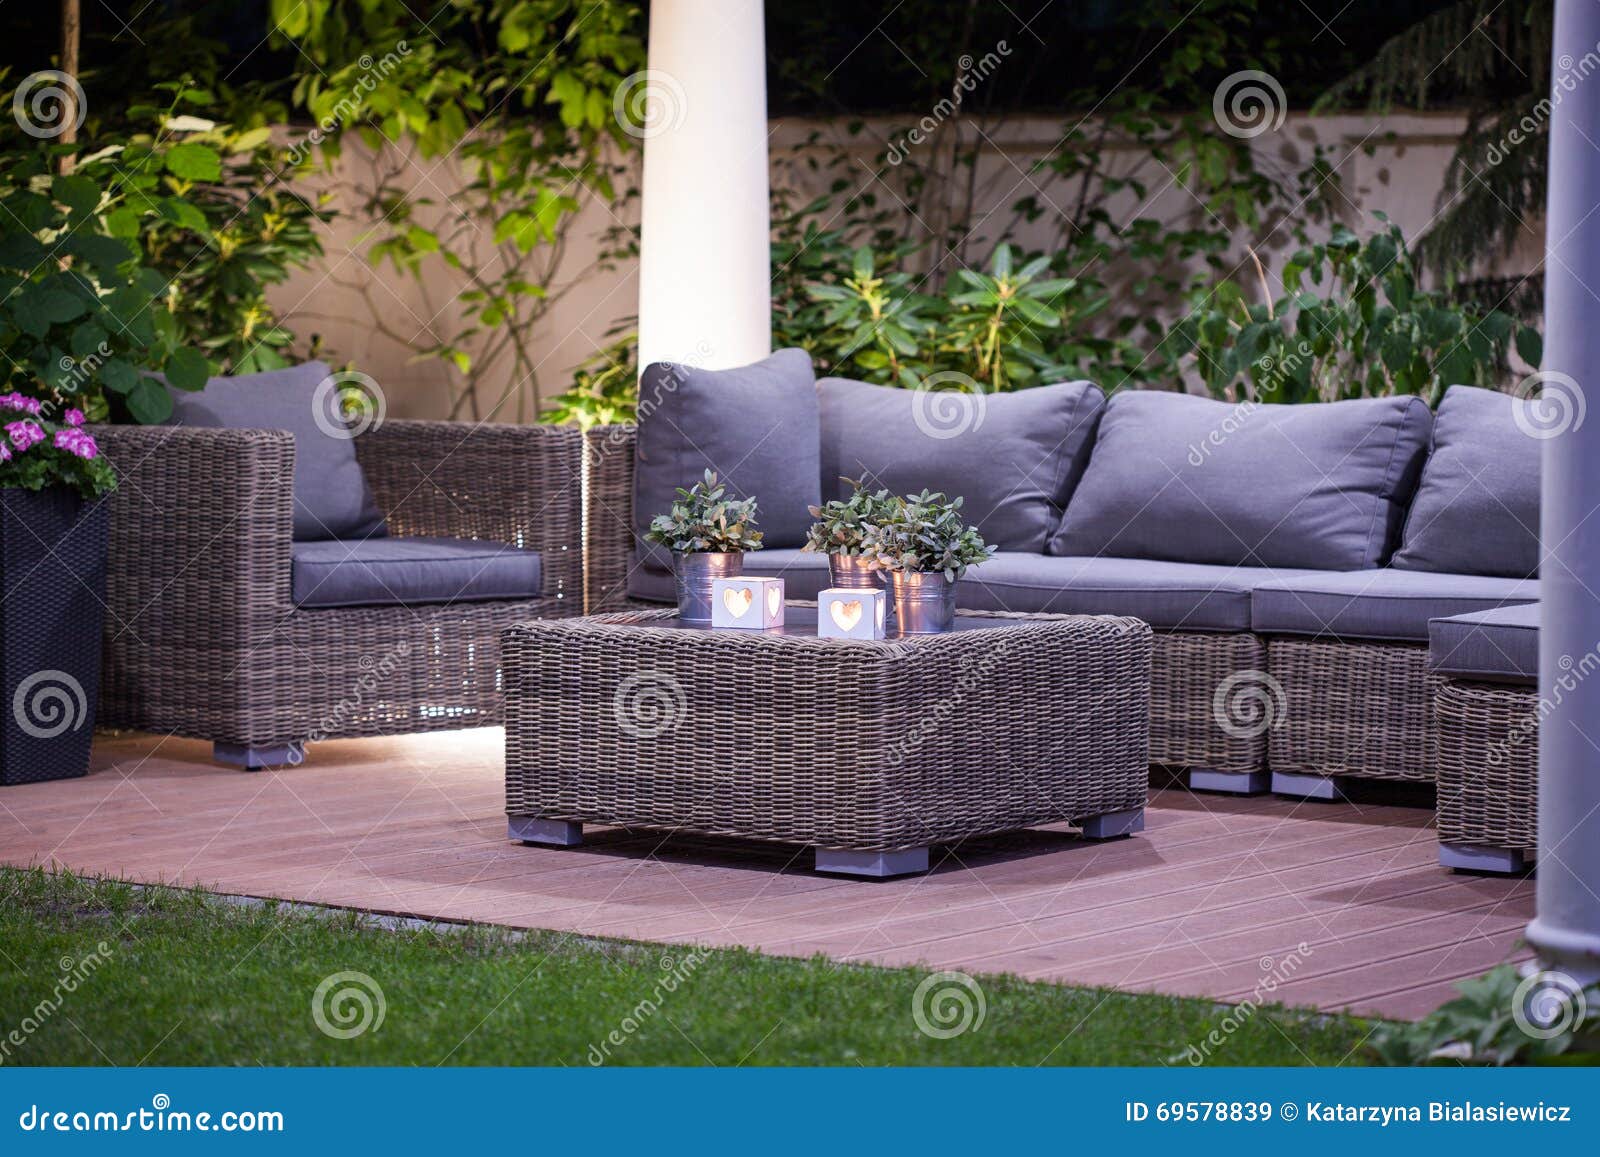 luxurious rattan garden furnitures